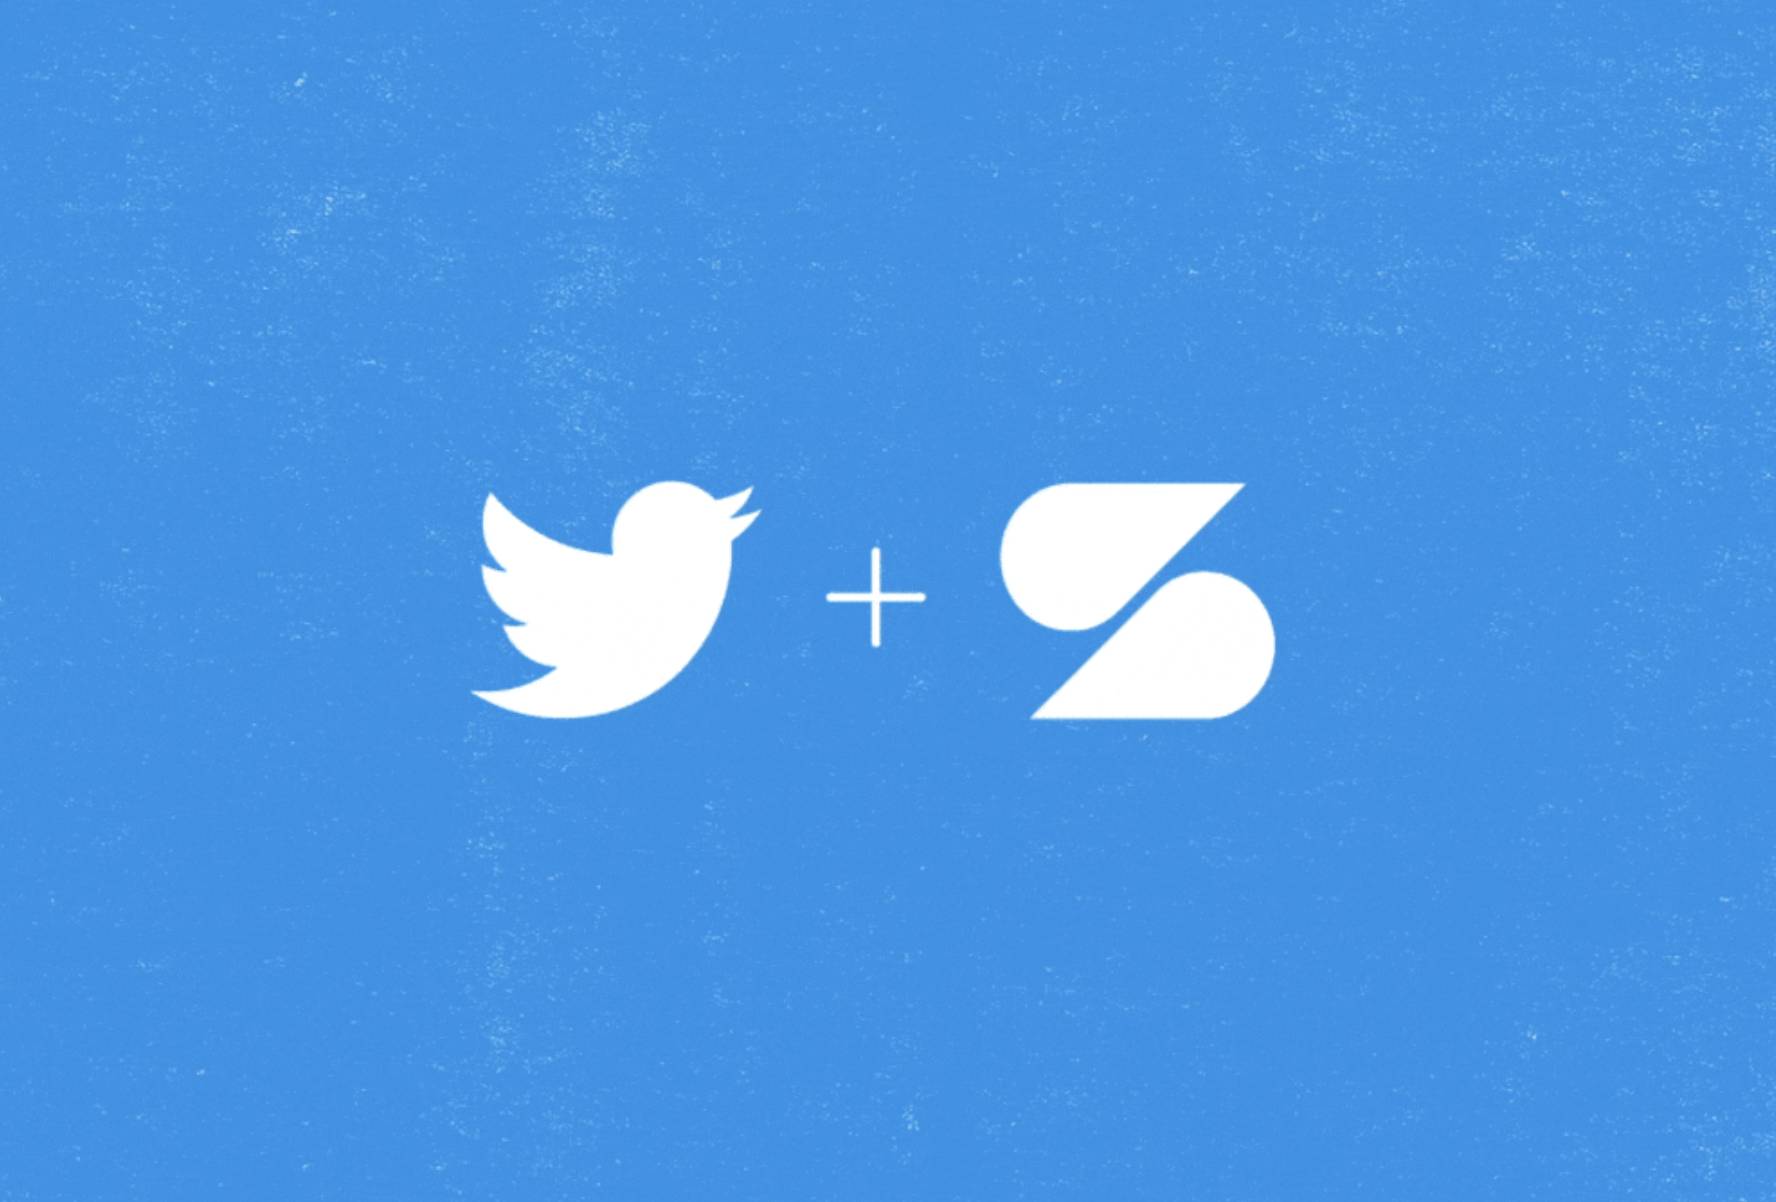 Les logos de Twitter et de Scroll